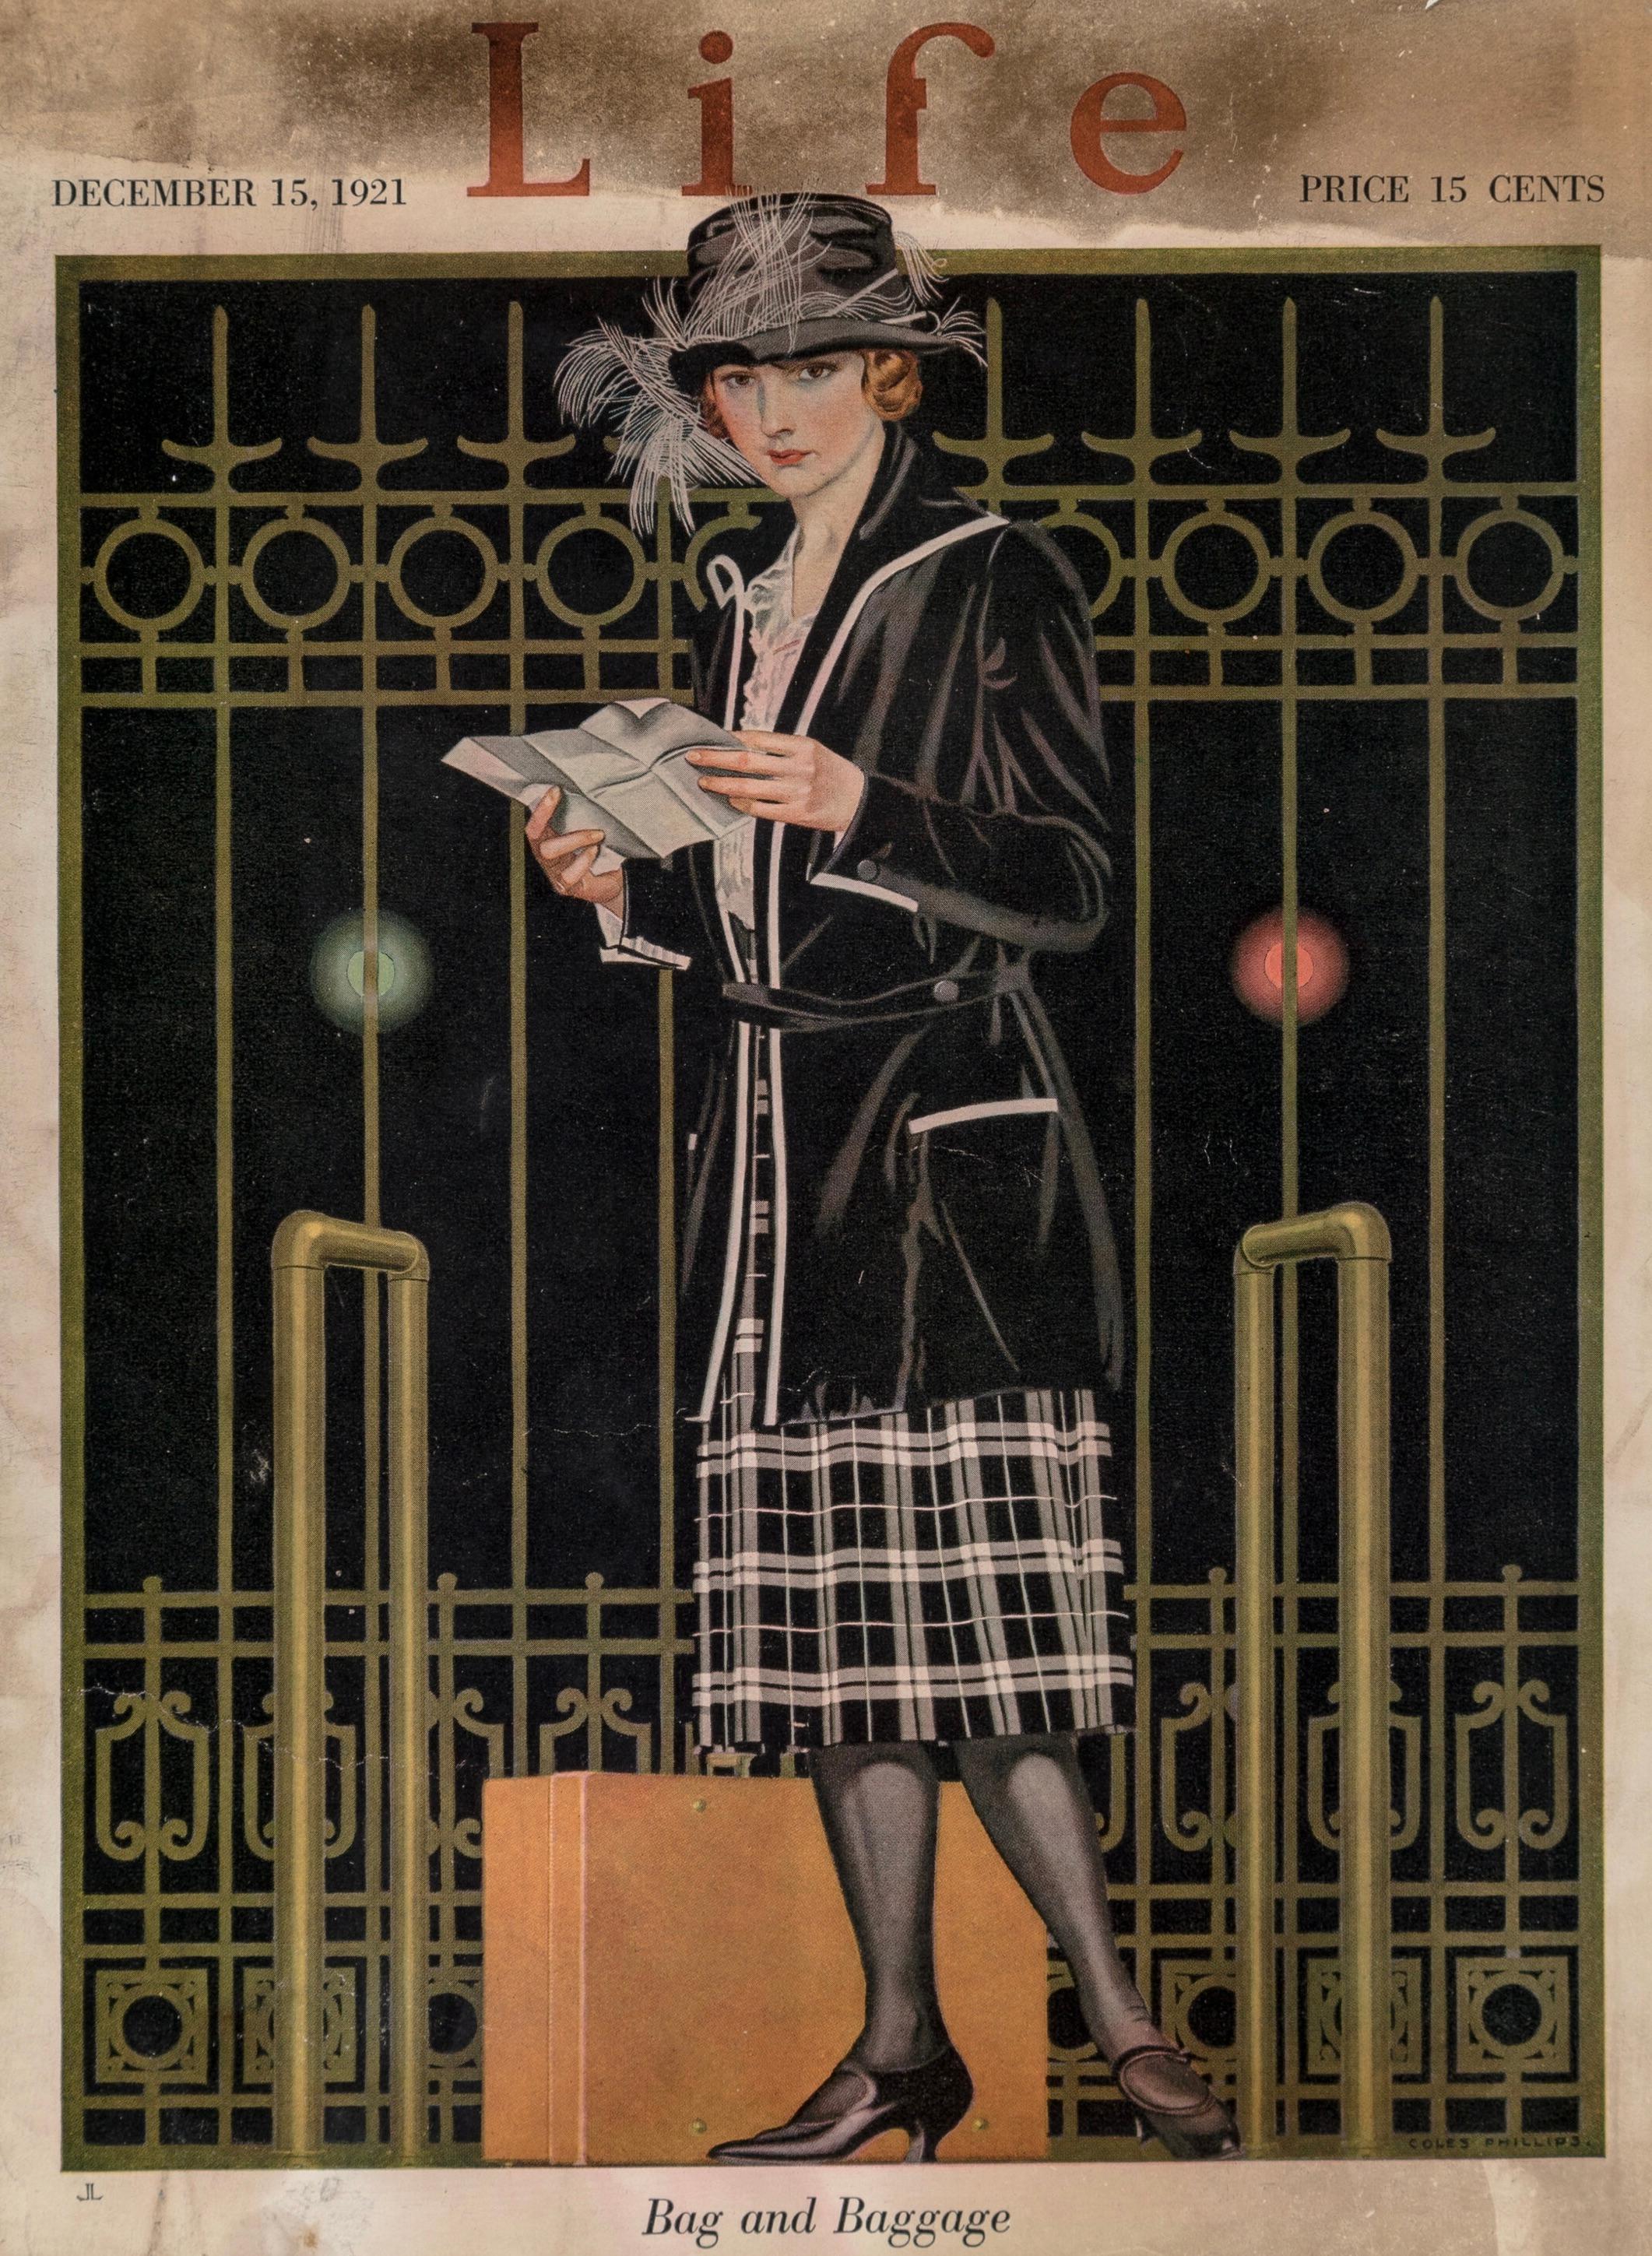 LIFE Magazine cover, December 15, 1921

